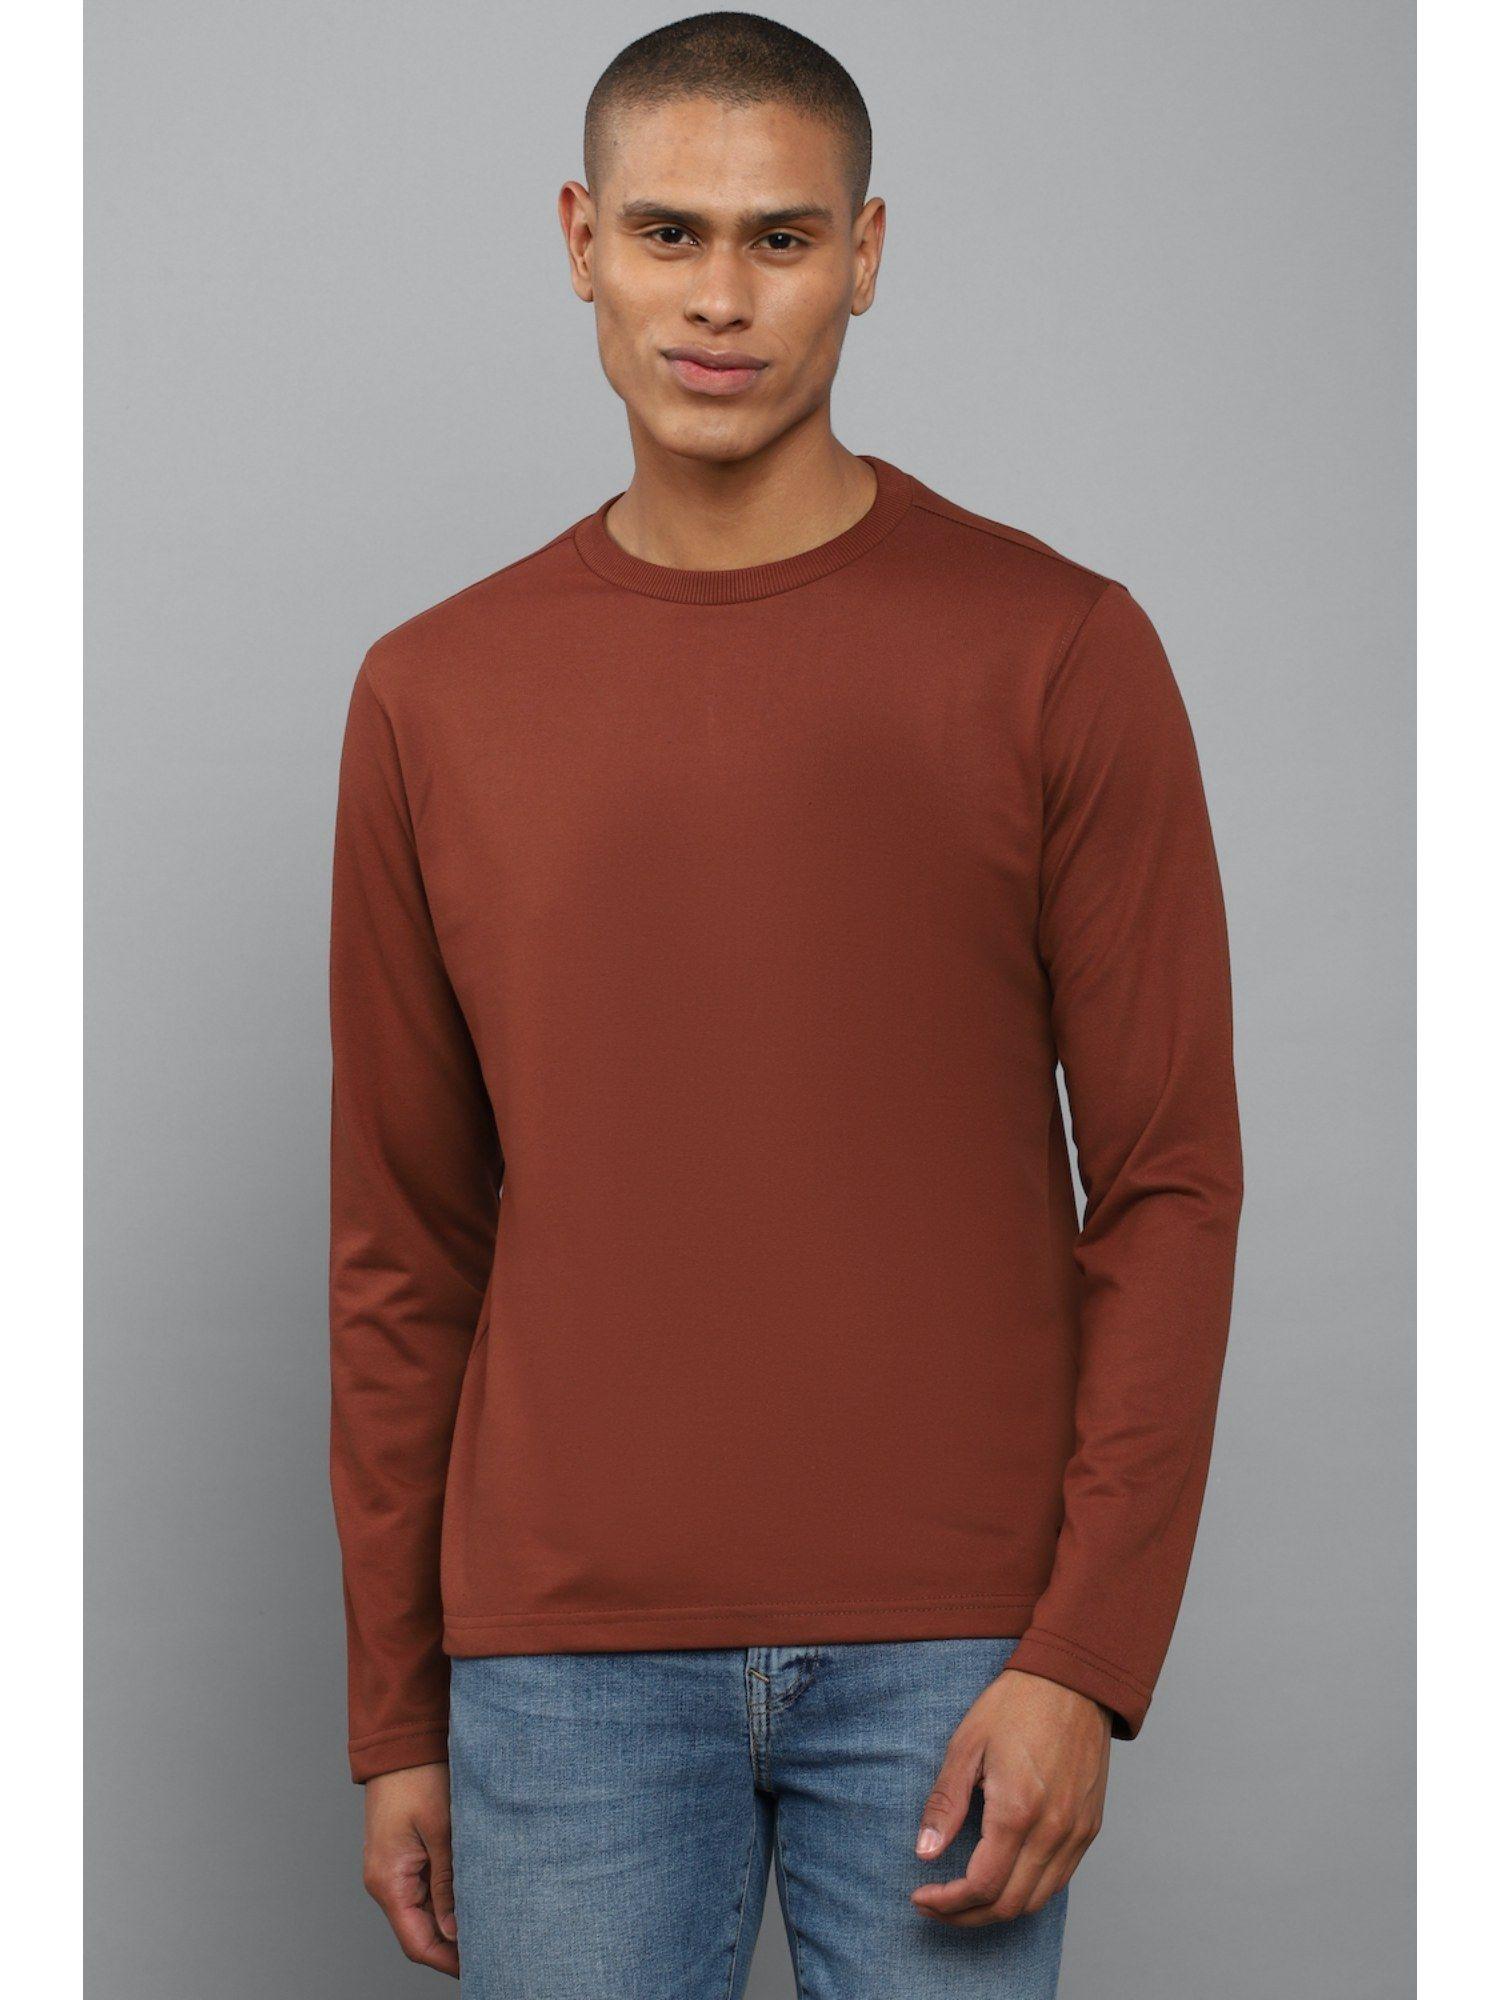 men-brown-crew-neck-full-sleeves-casual-sweatshirt